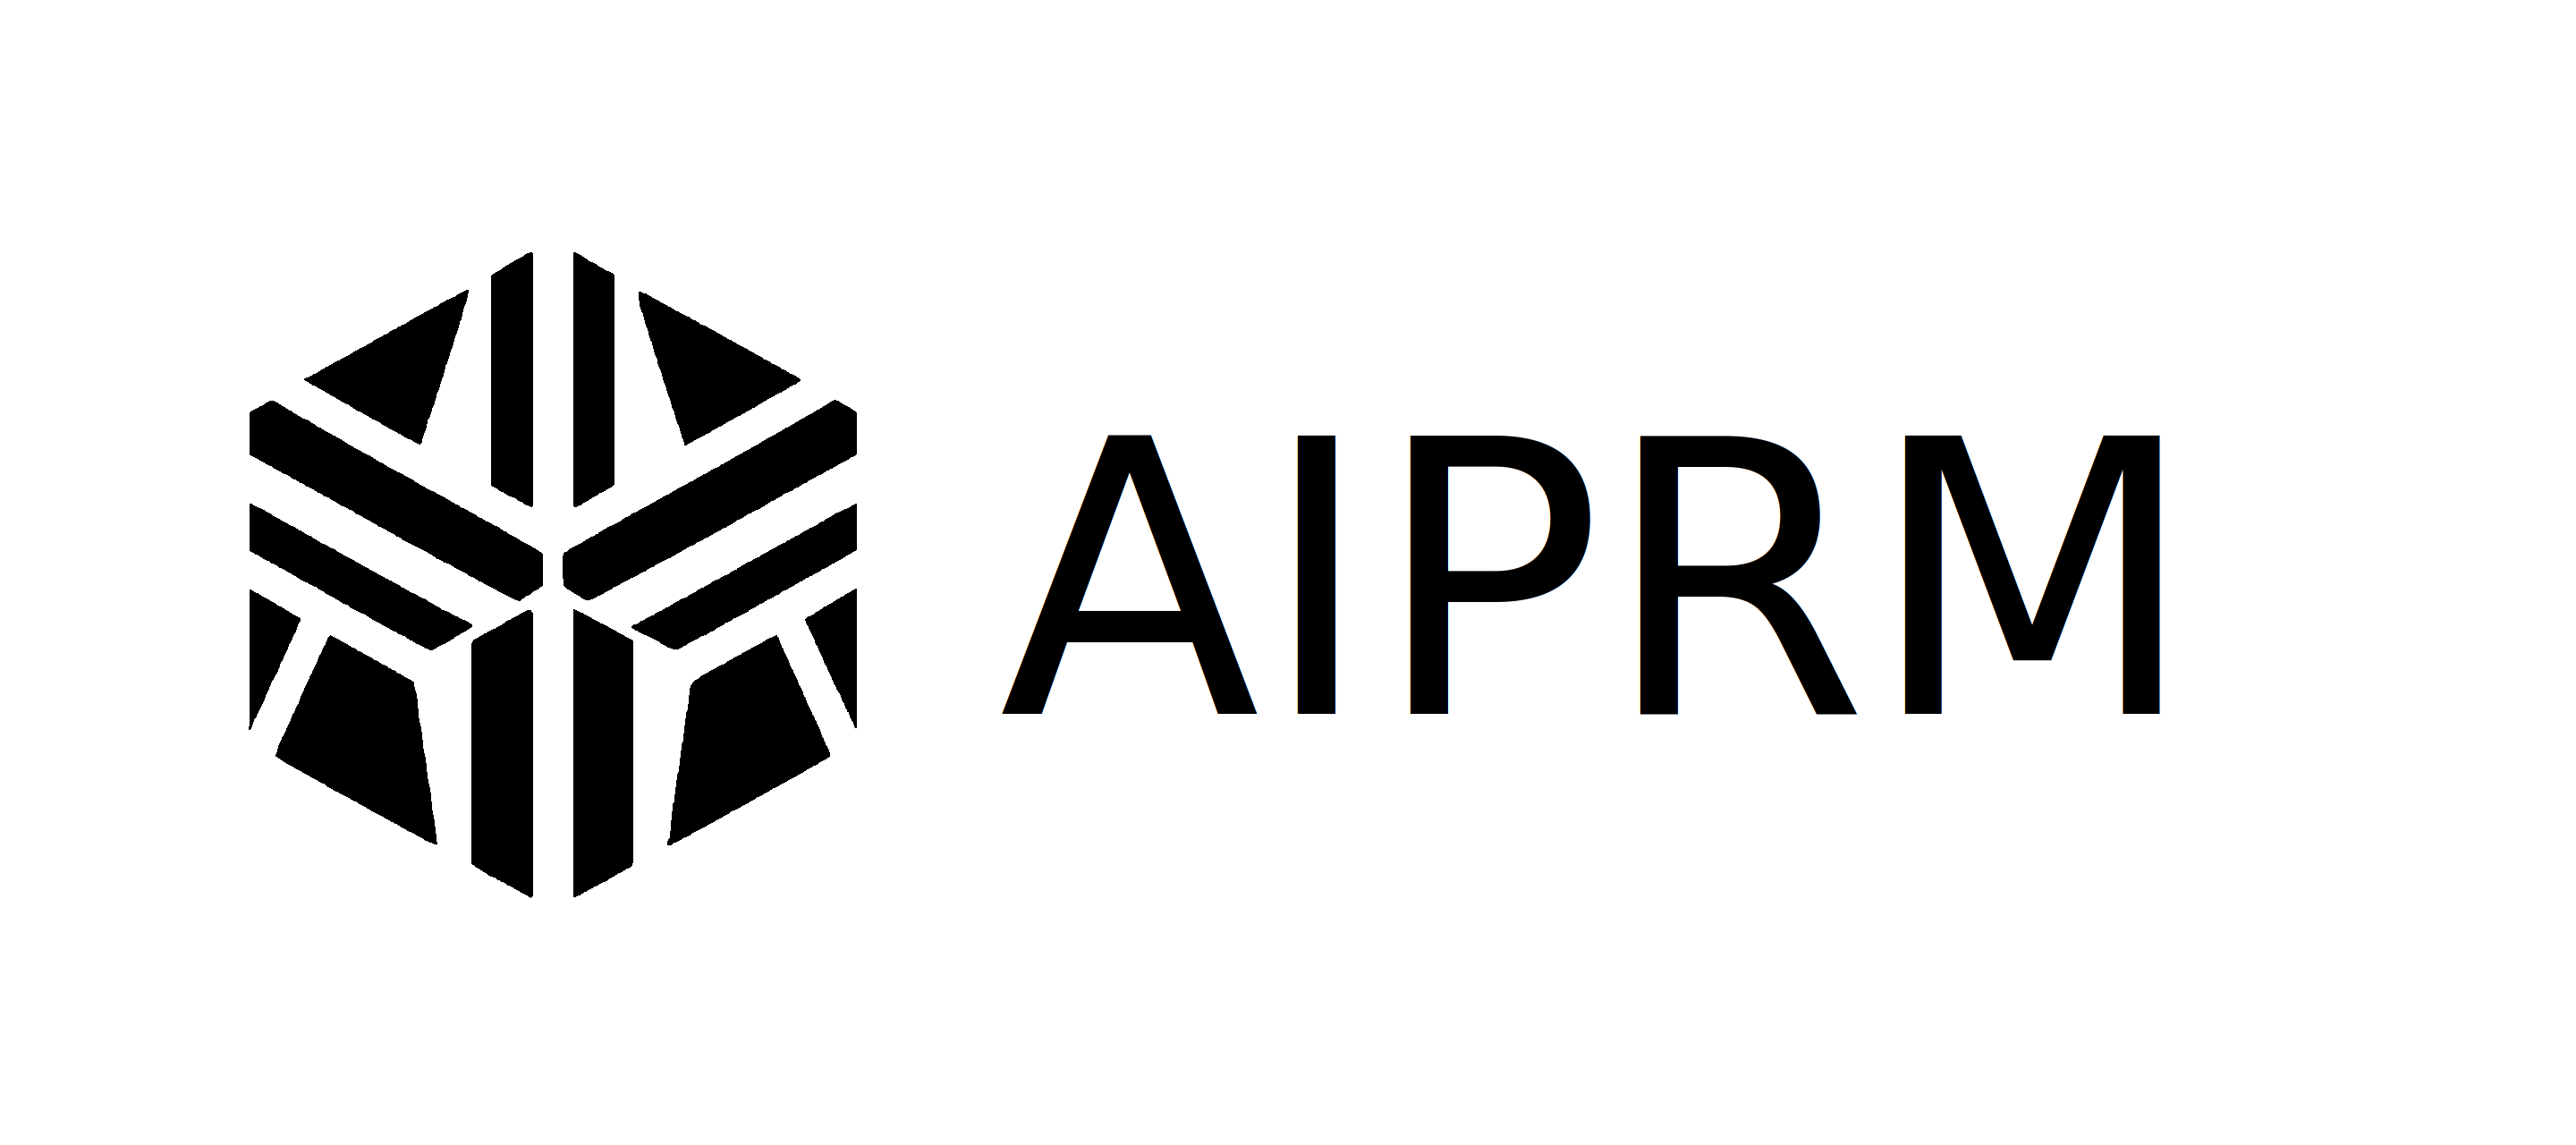 AIPRM Logo